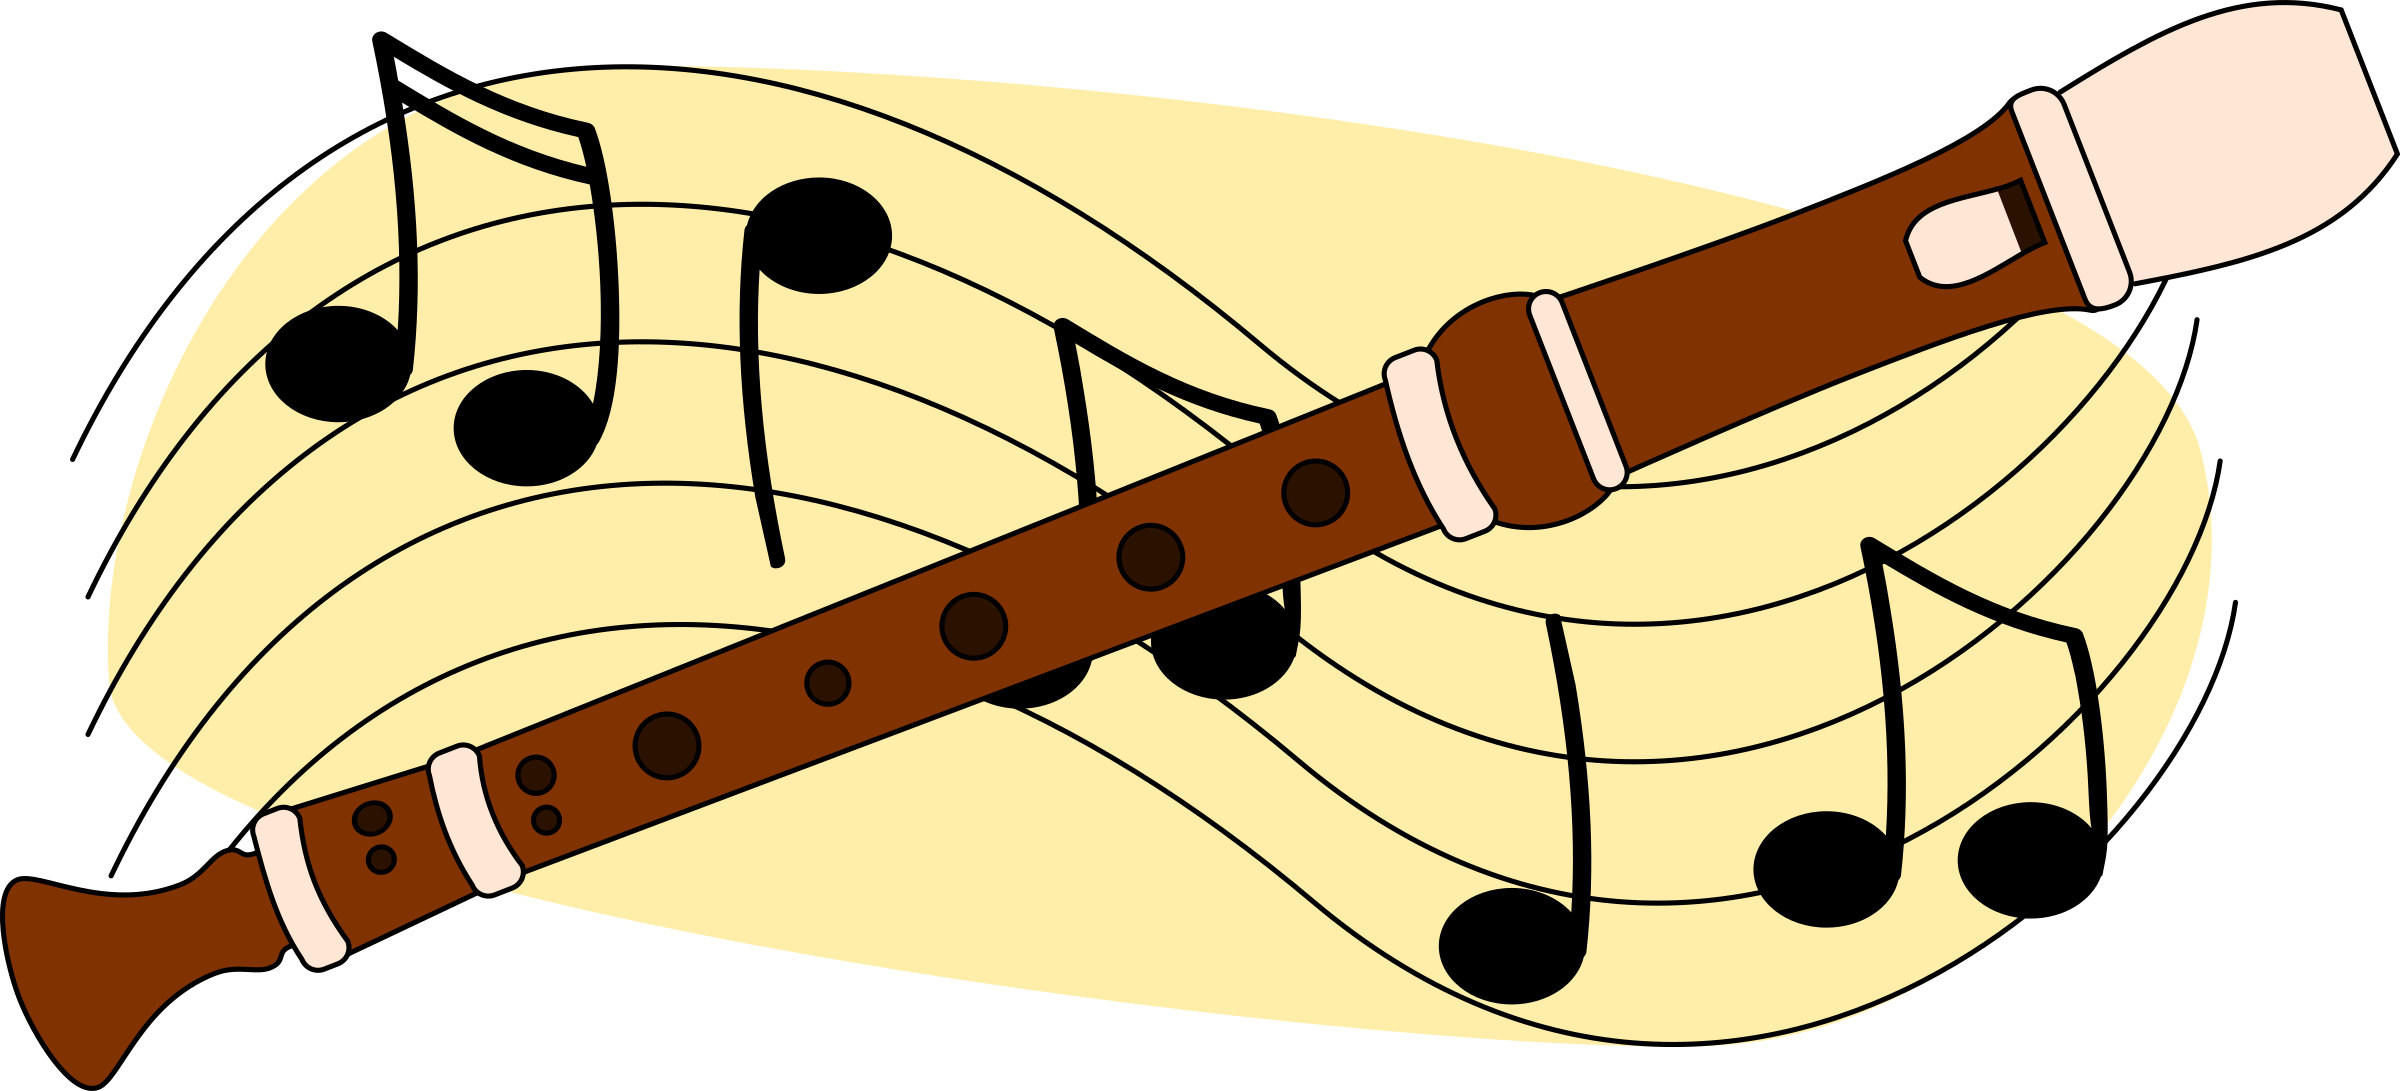 flutes clipart music class